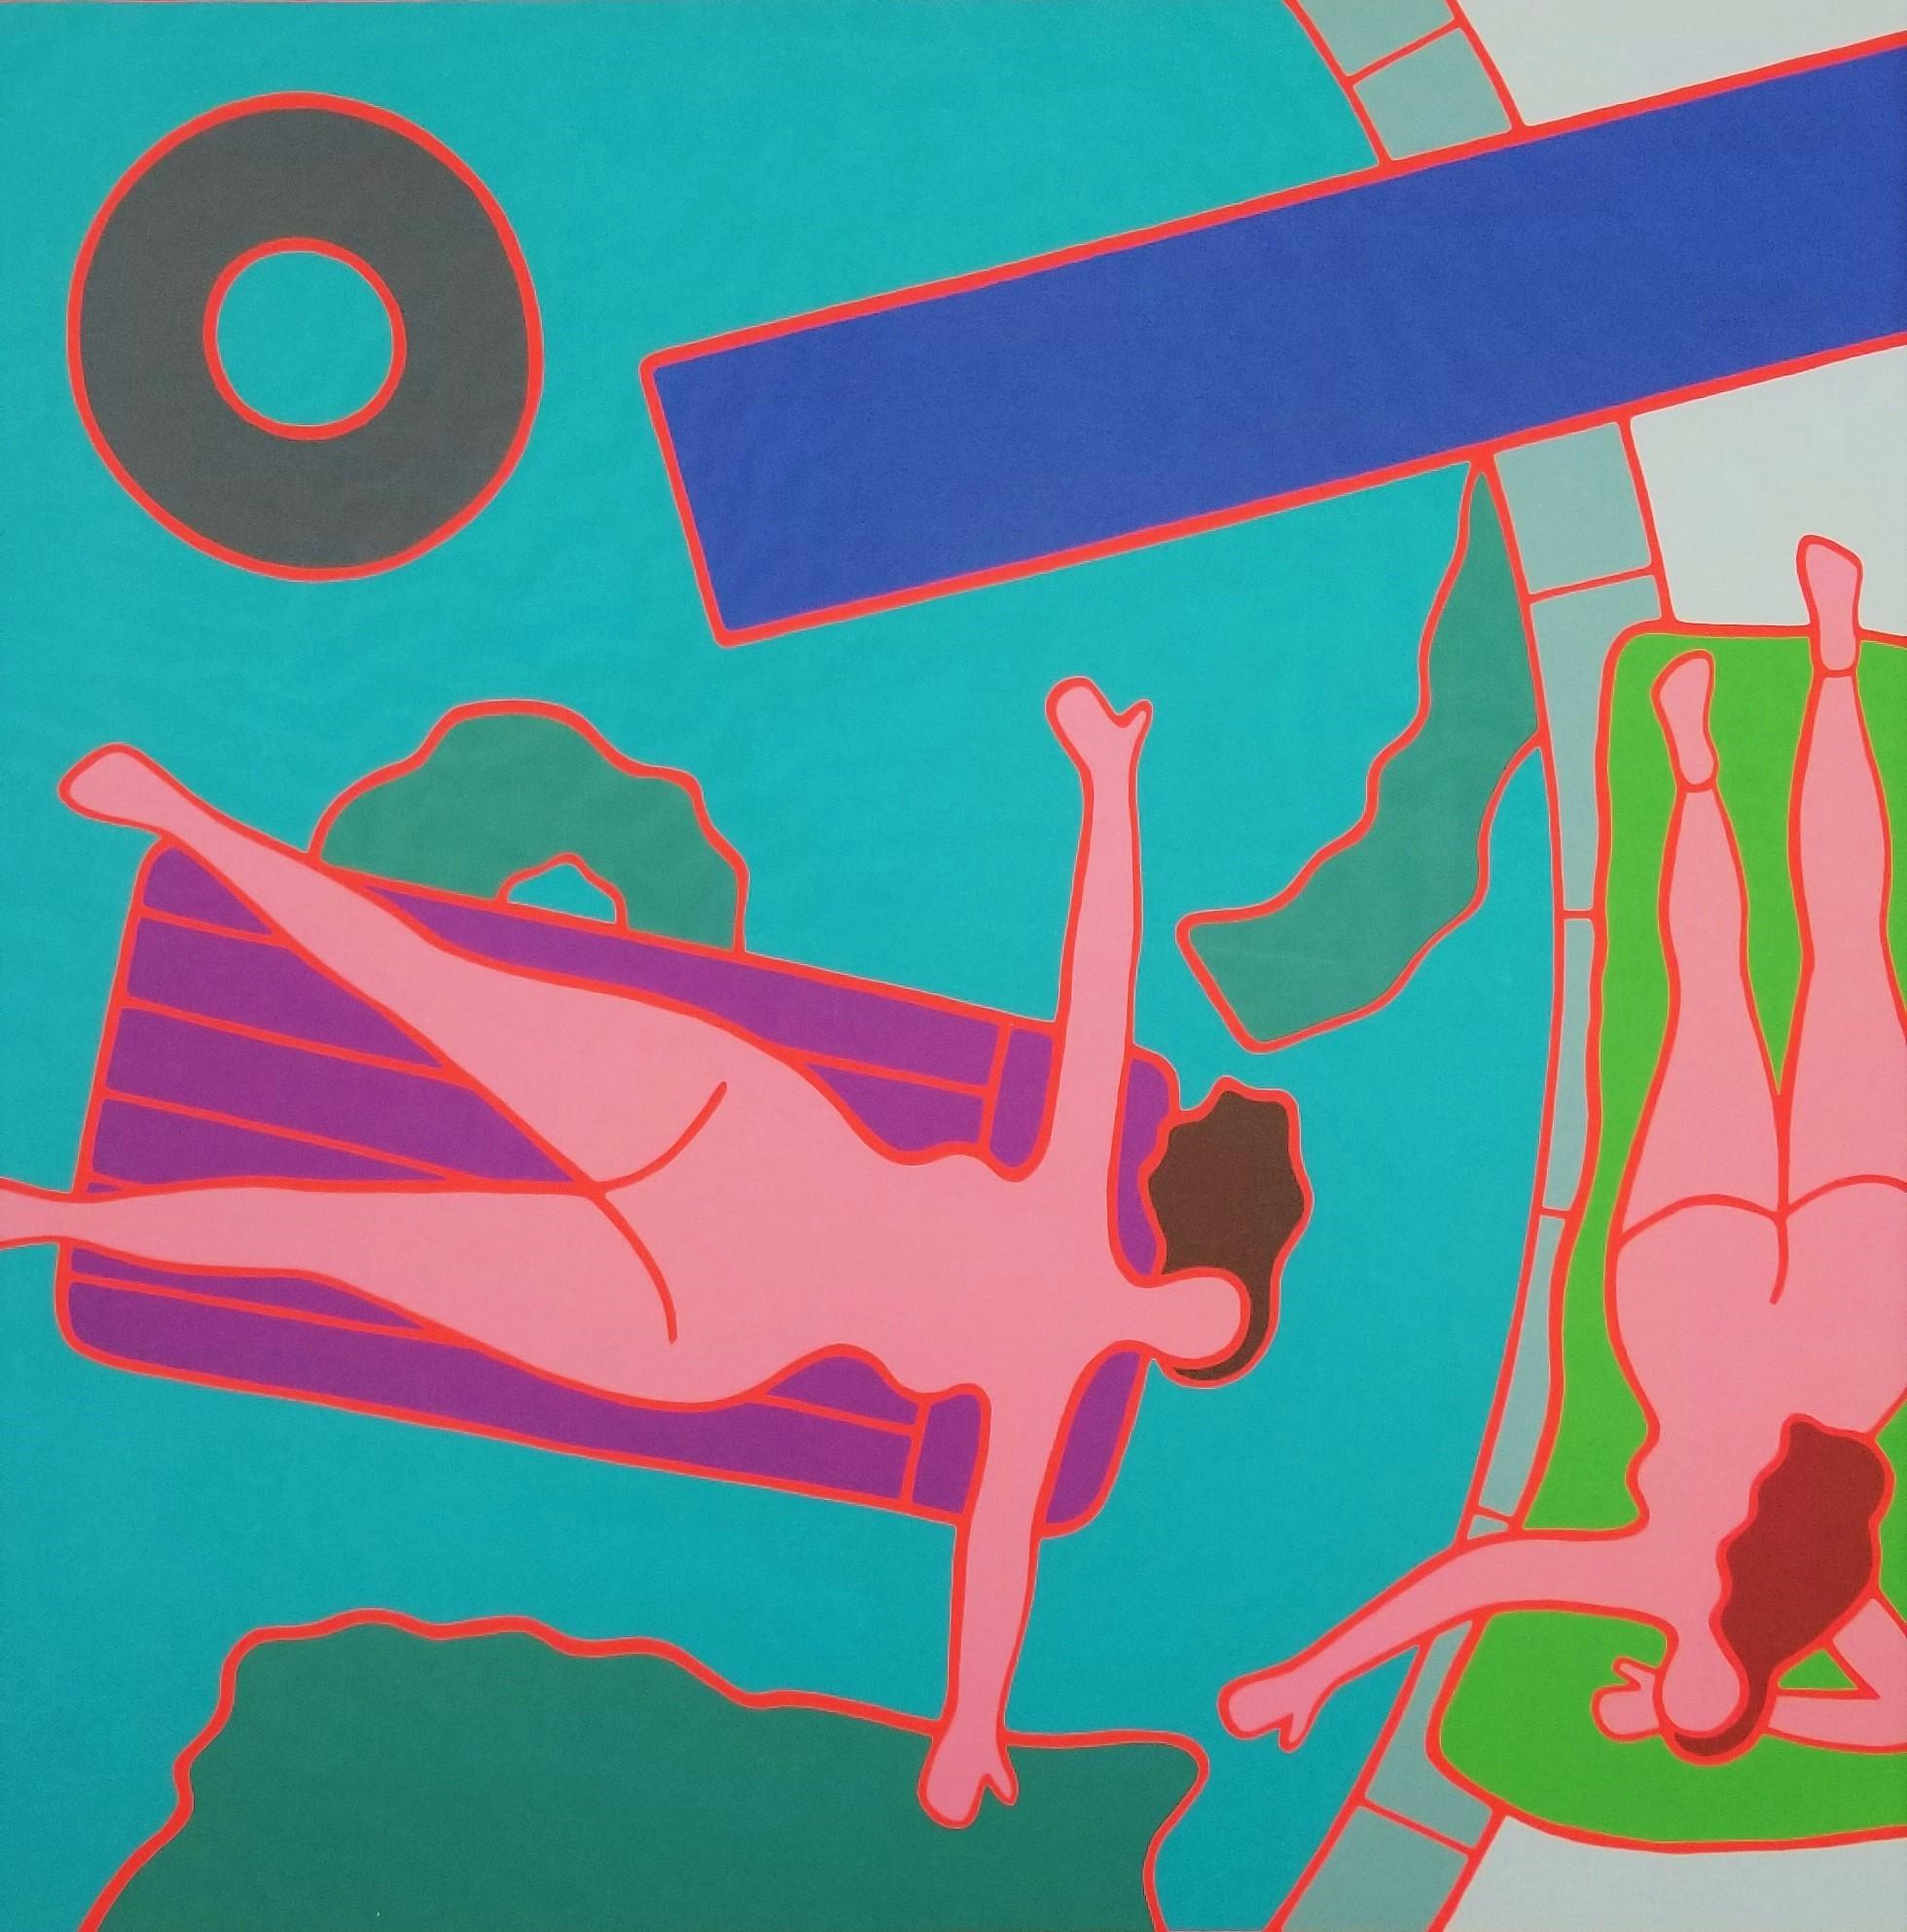 Dan May Nude Print - Sun Therapy /// Contemporary Pop Art Nudes Swimming Pool Figurative Screenprint